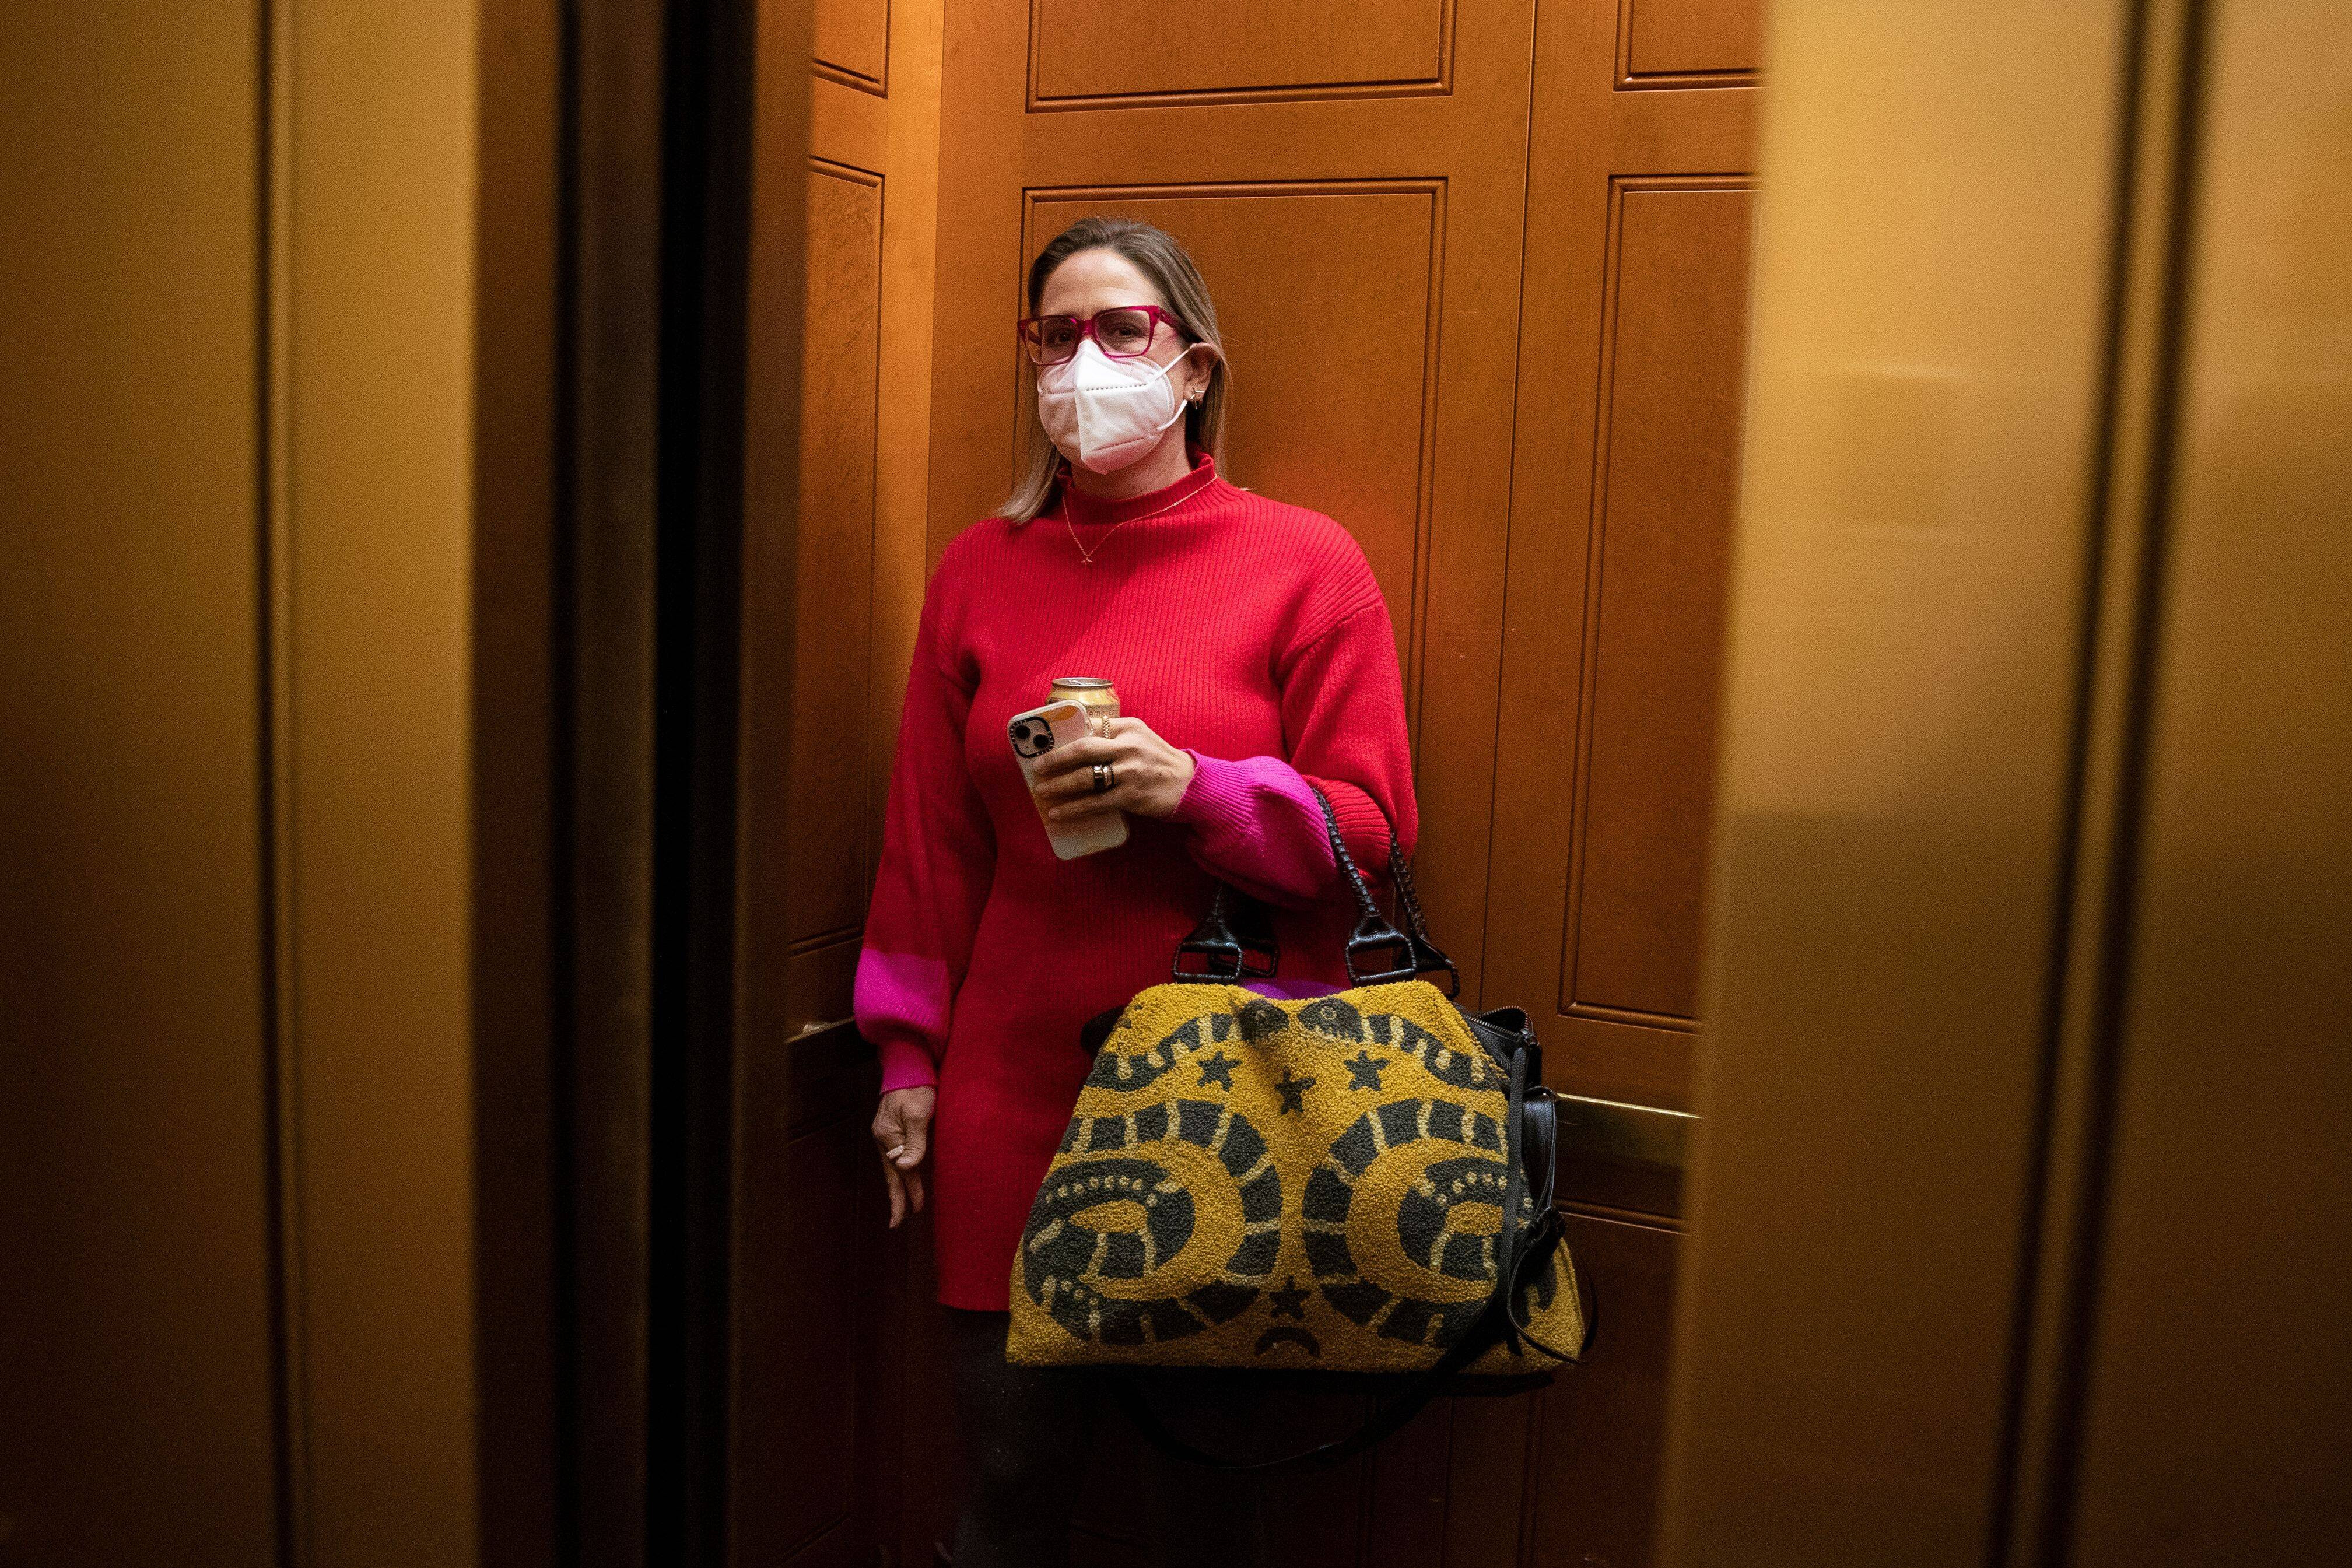 Sen. Kyrsten Sinema, a Democrat from Arizona, enters an elevator on Capitol Hill last week. (Michael Reynolds/EPA-EFE/Shutterstock)